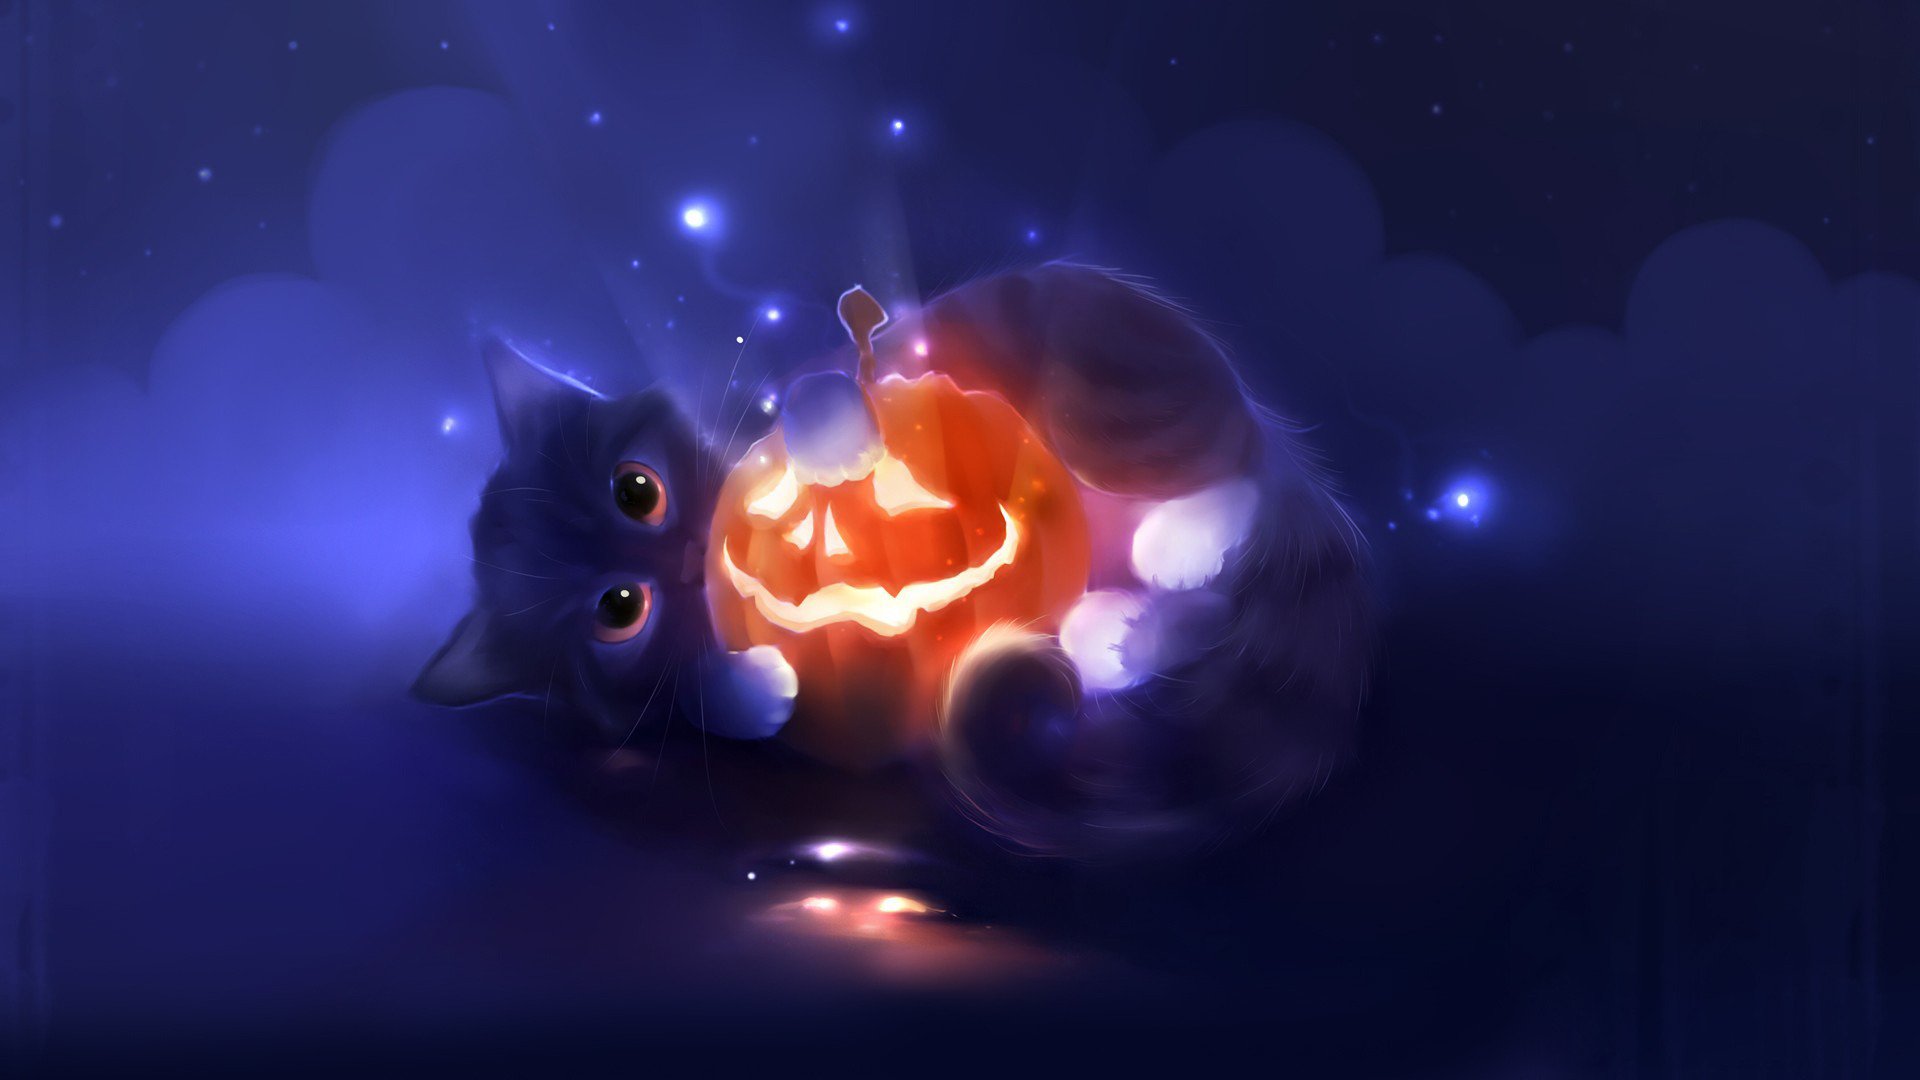 Cute And Lovely Cat For Desktop Wallpaper Wpt7203646 Halloween